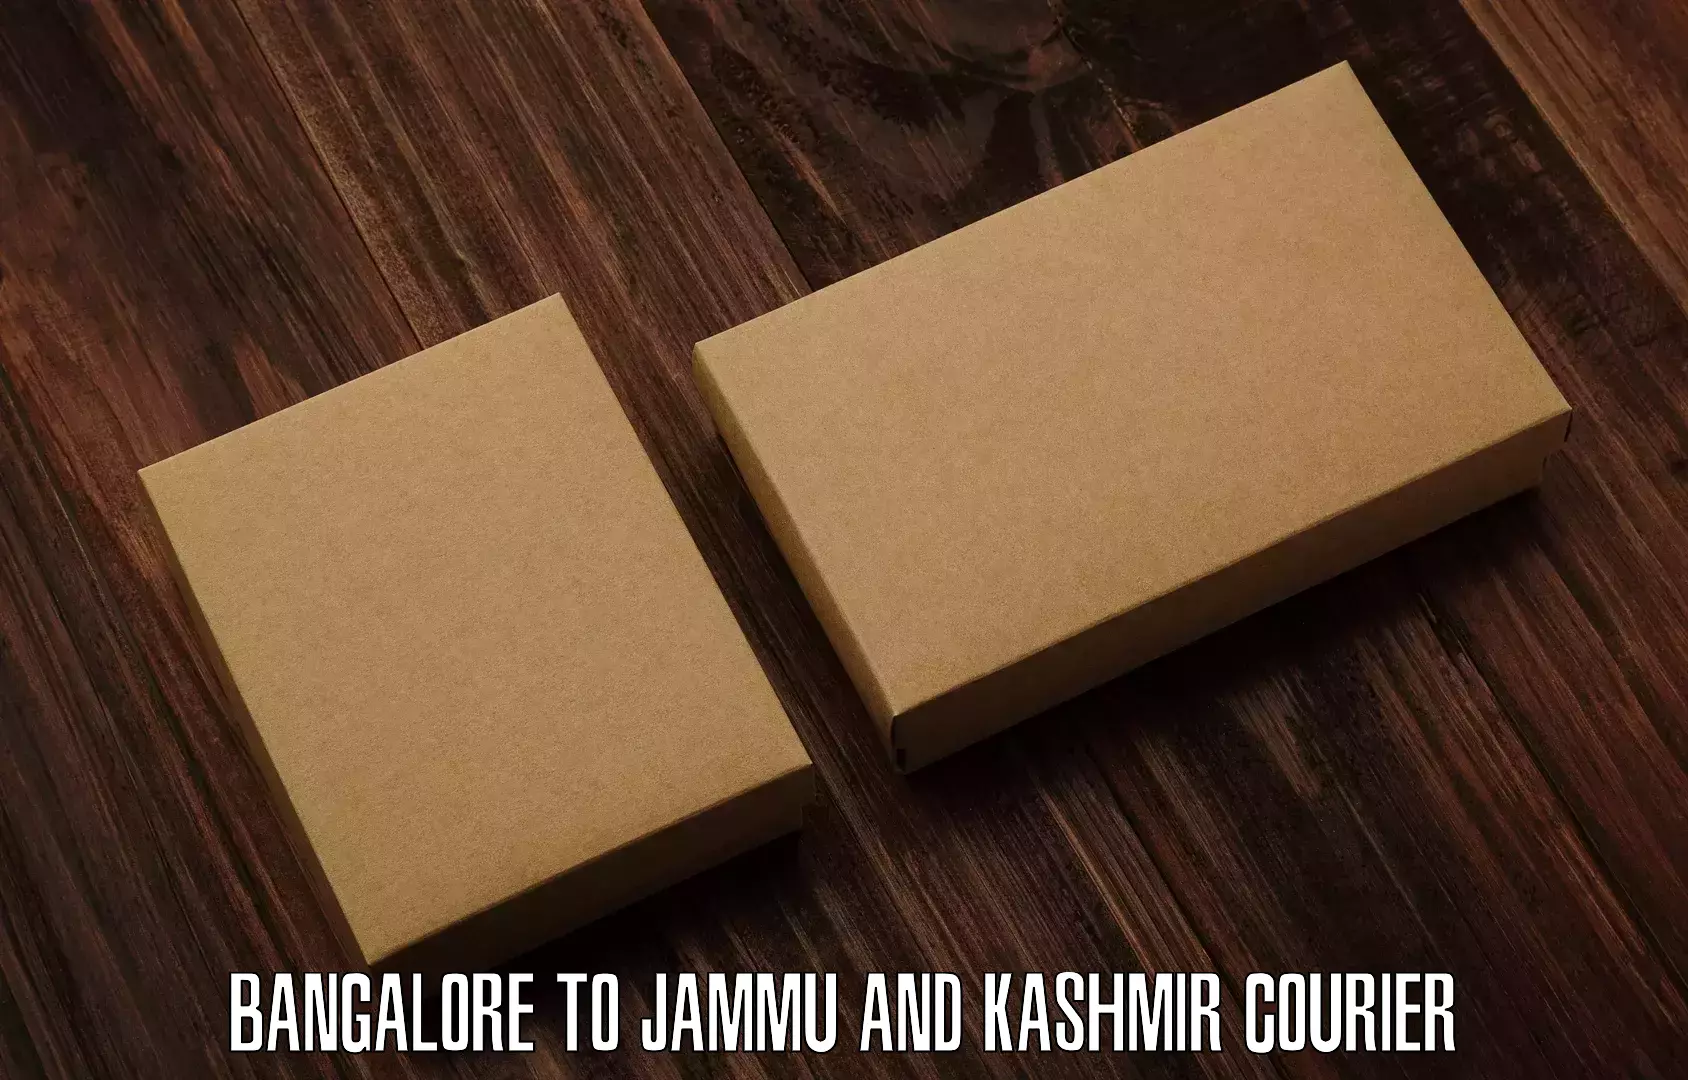 Next-day delivery options Bangalore to Rajouri